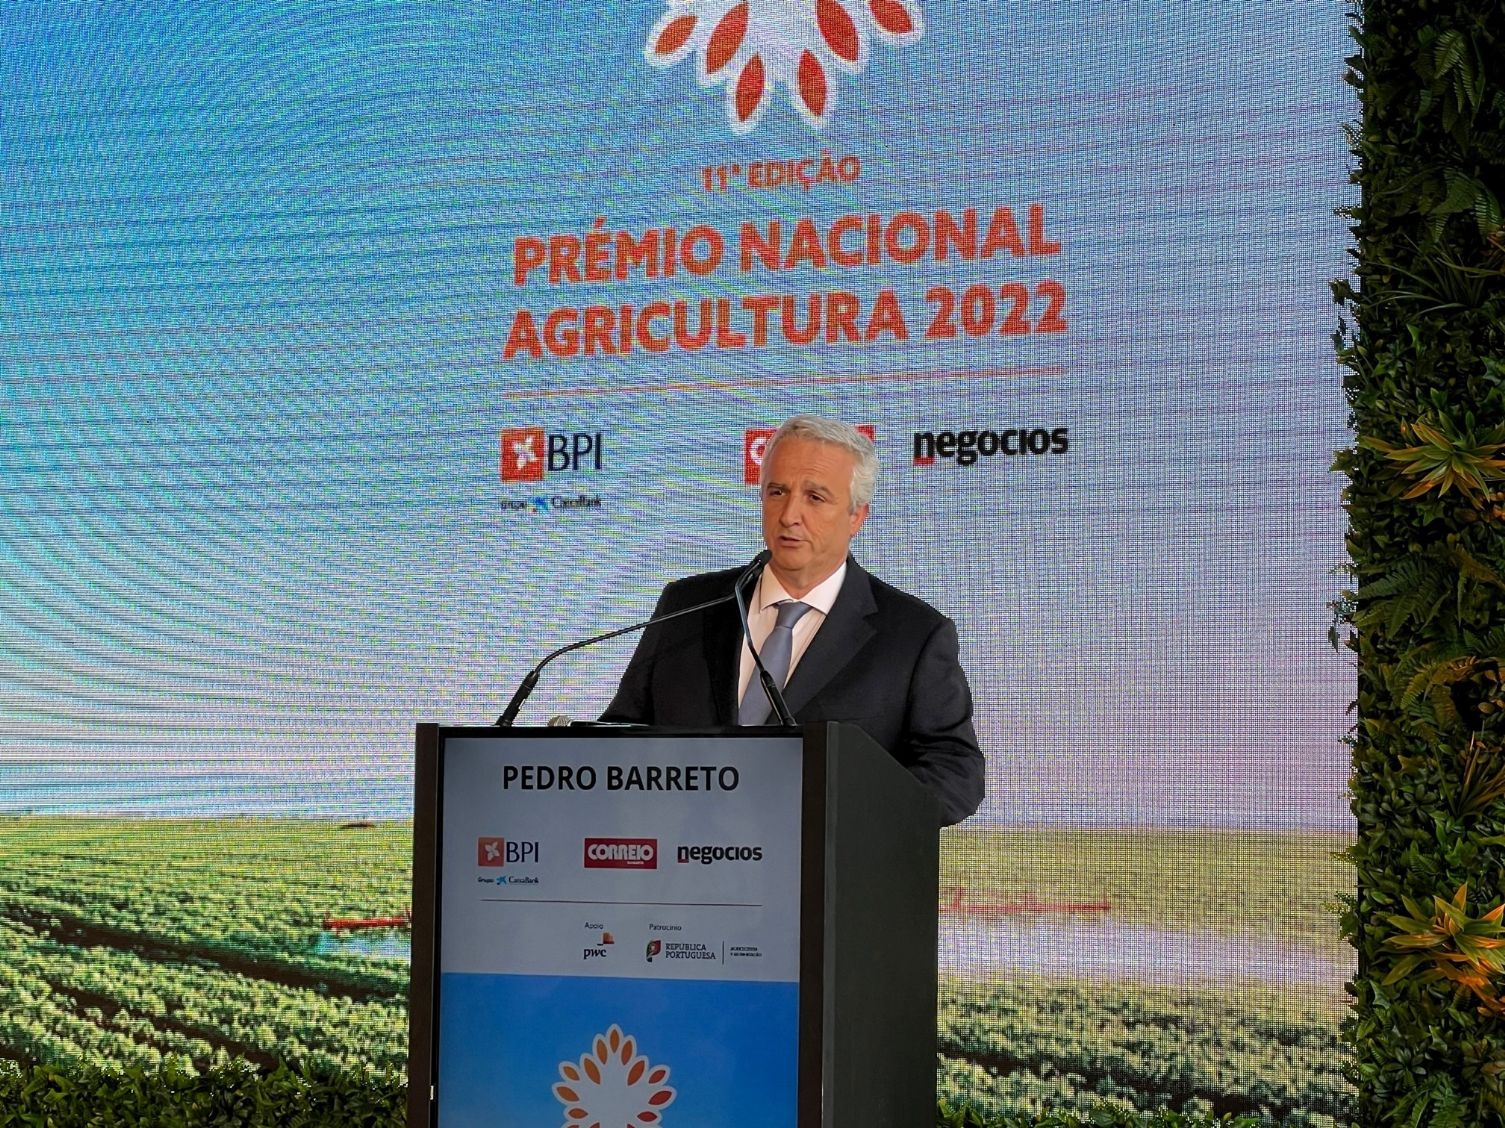 Prémio Nacional de Agricultura distingue projectos e personalidades que mais contribuíram para o progresso do sector